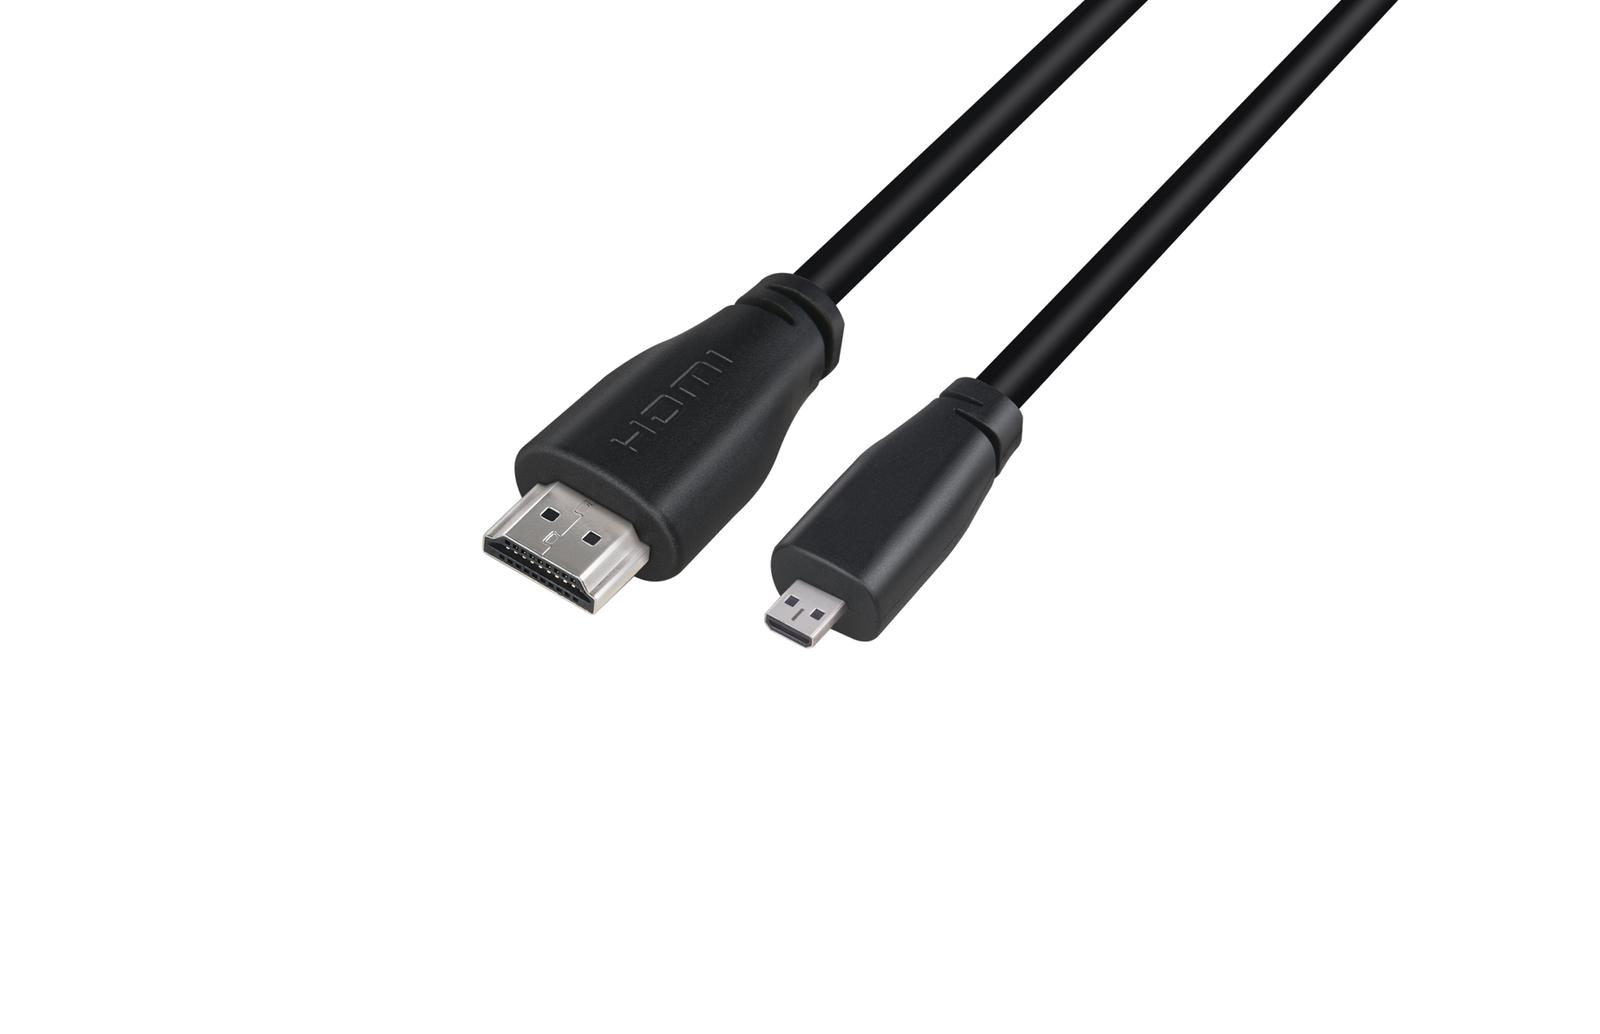 HDMI Cable for Raspberry Pi 2 mtr Black